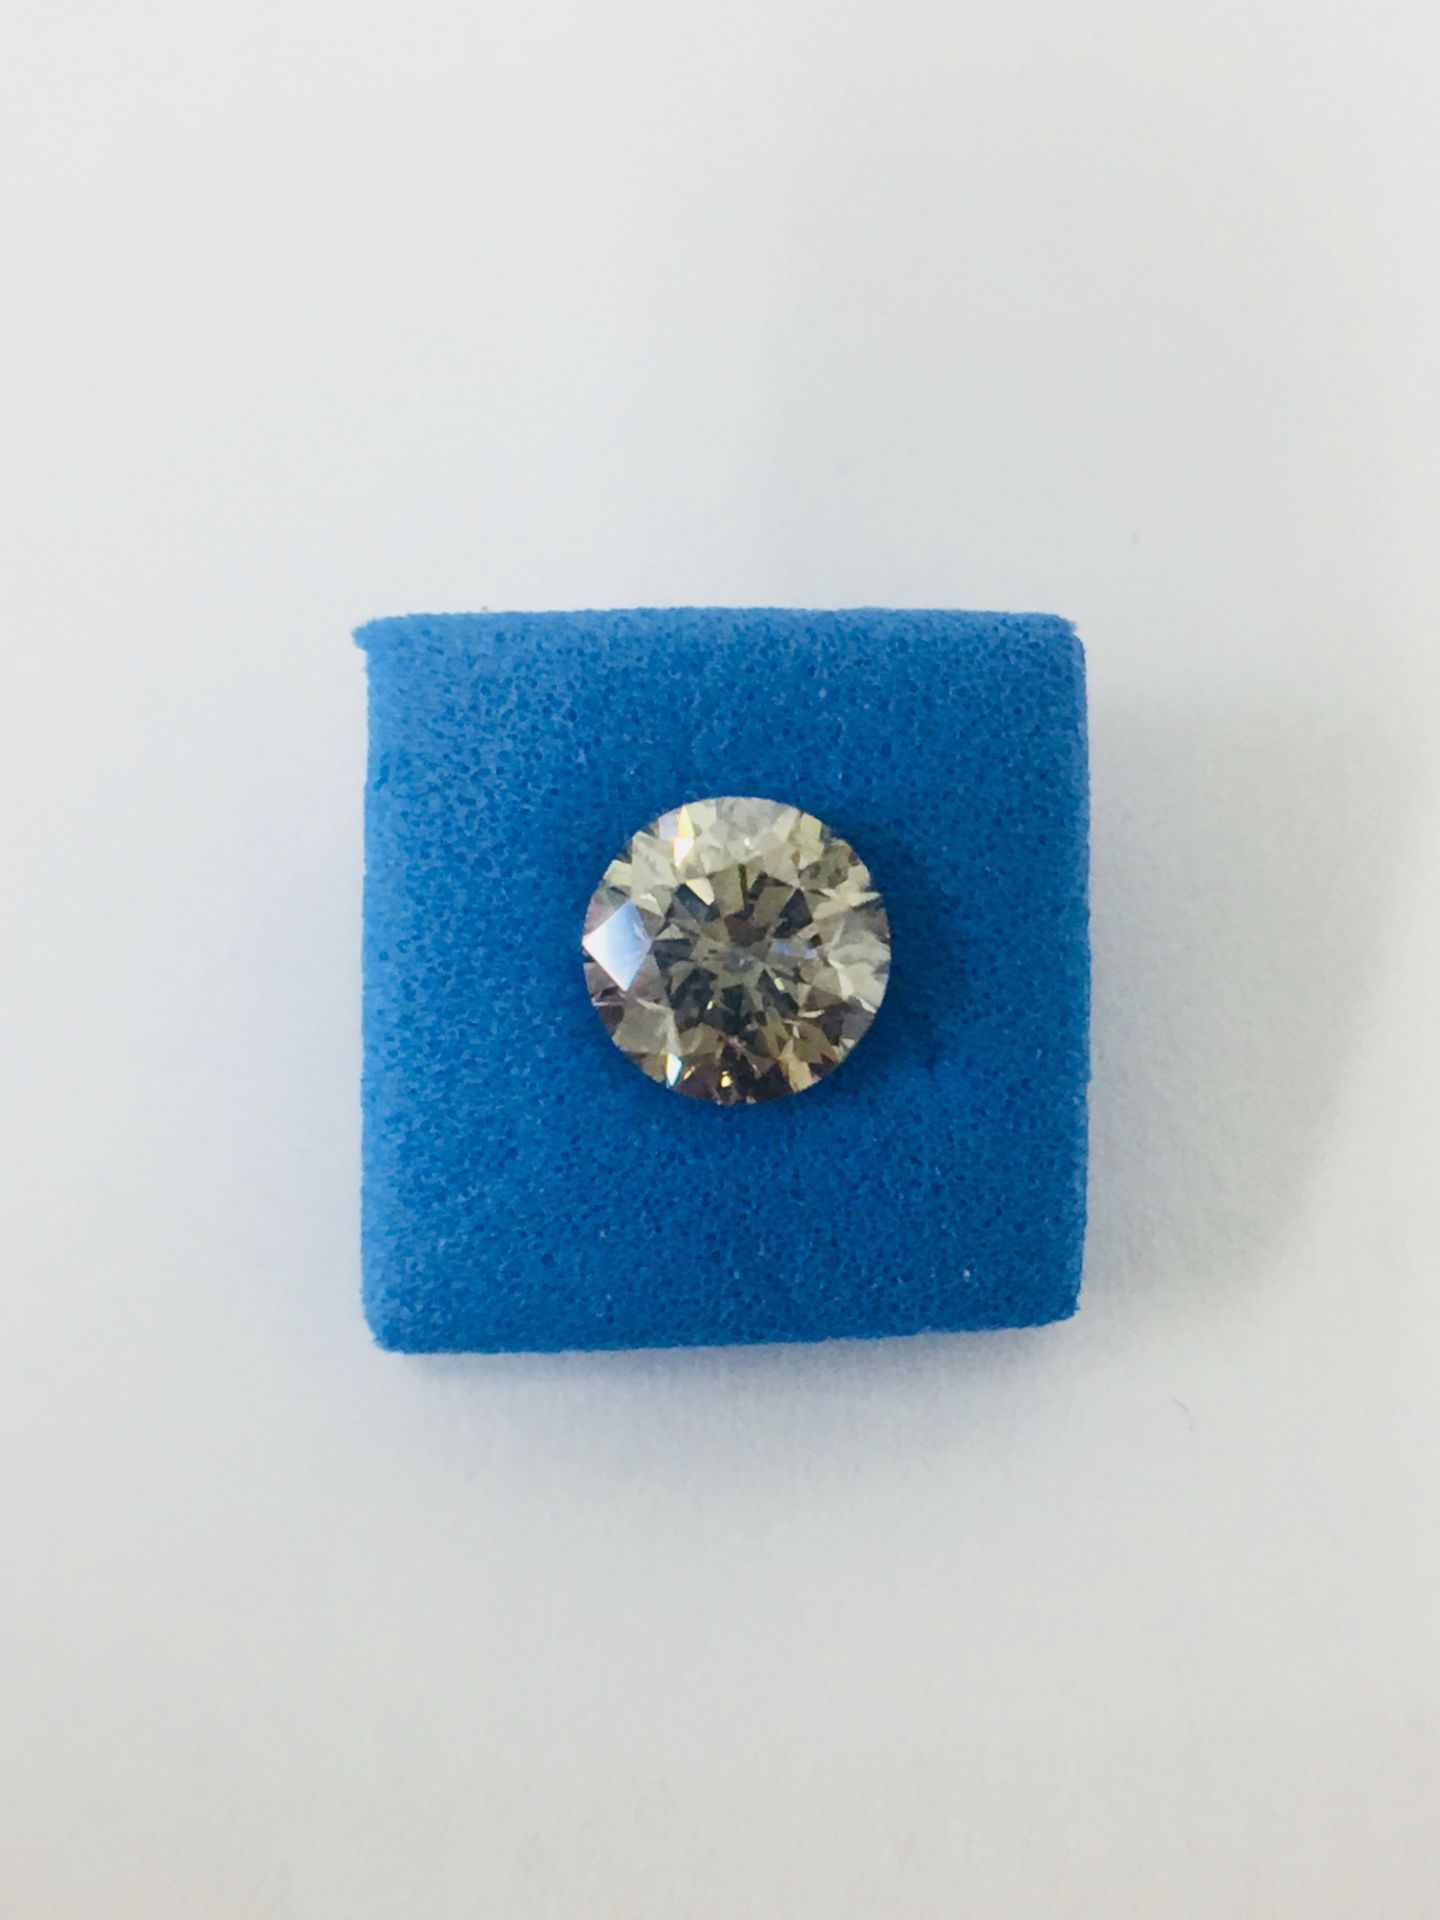 1.12ct Brilliant cut Natural diamond,K colour,i1 clarity,clarity enhanced - Image 3 of 3